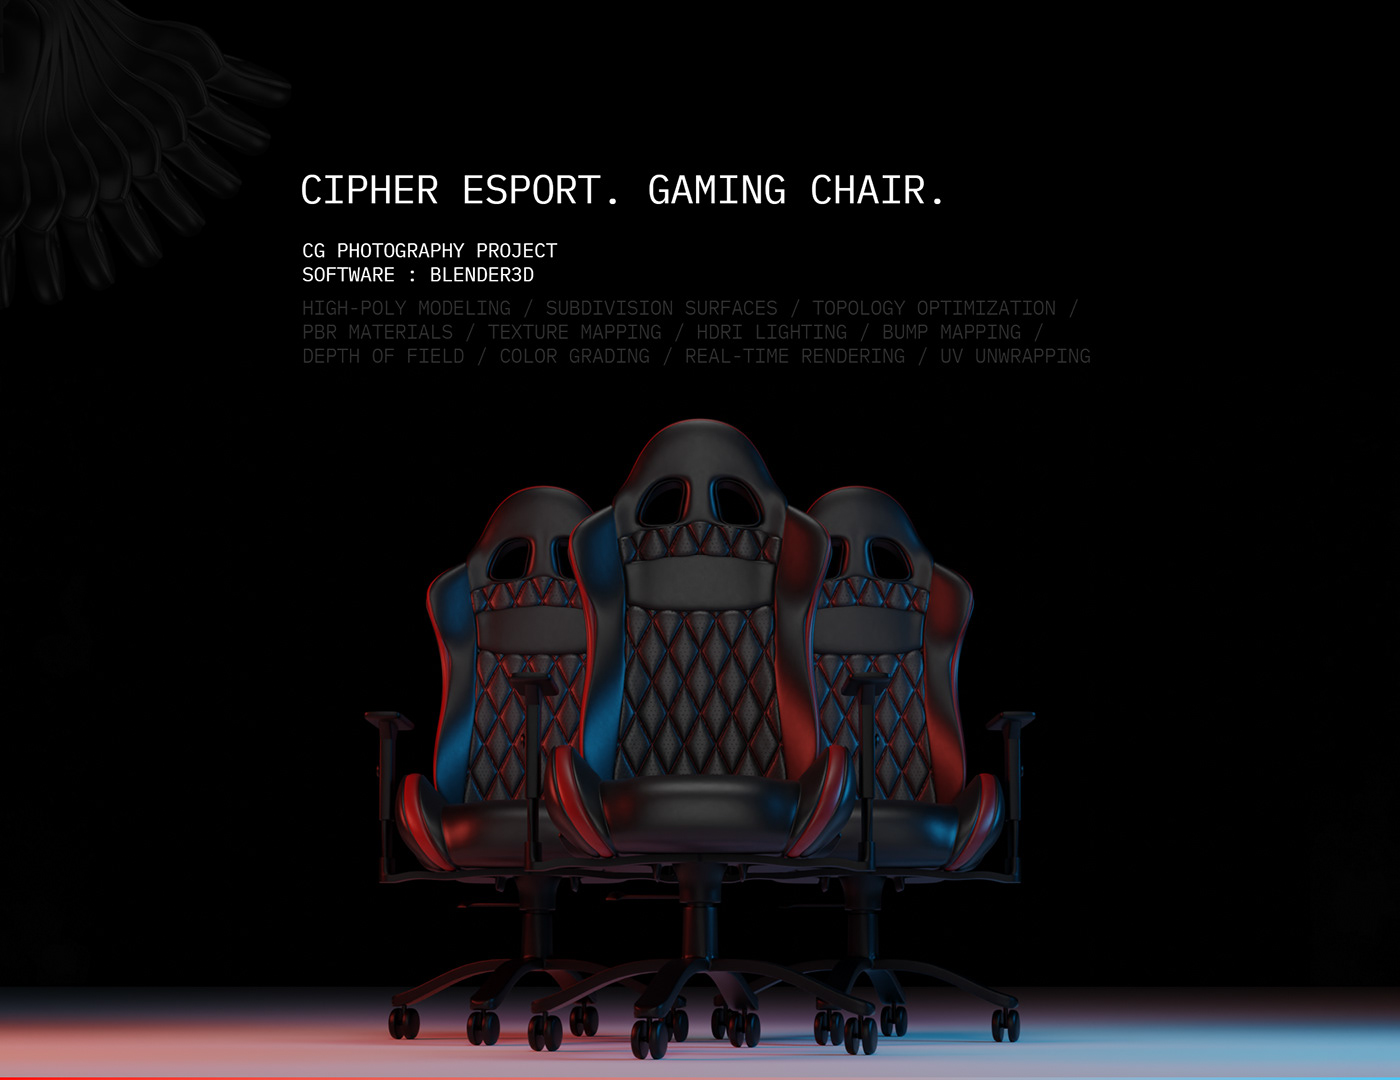 3 gaming chairs as hero shot